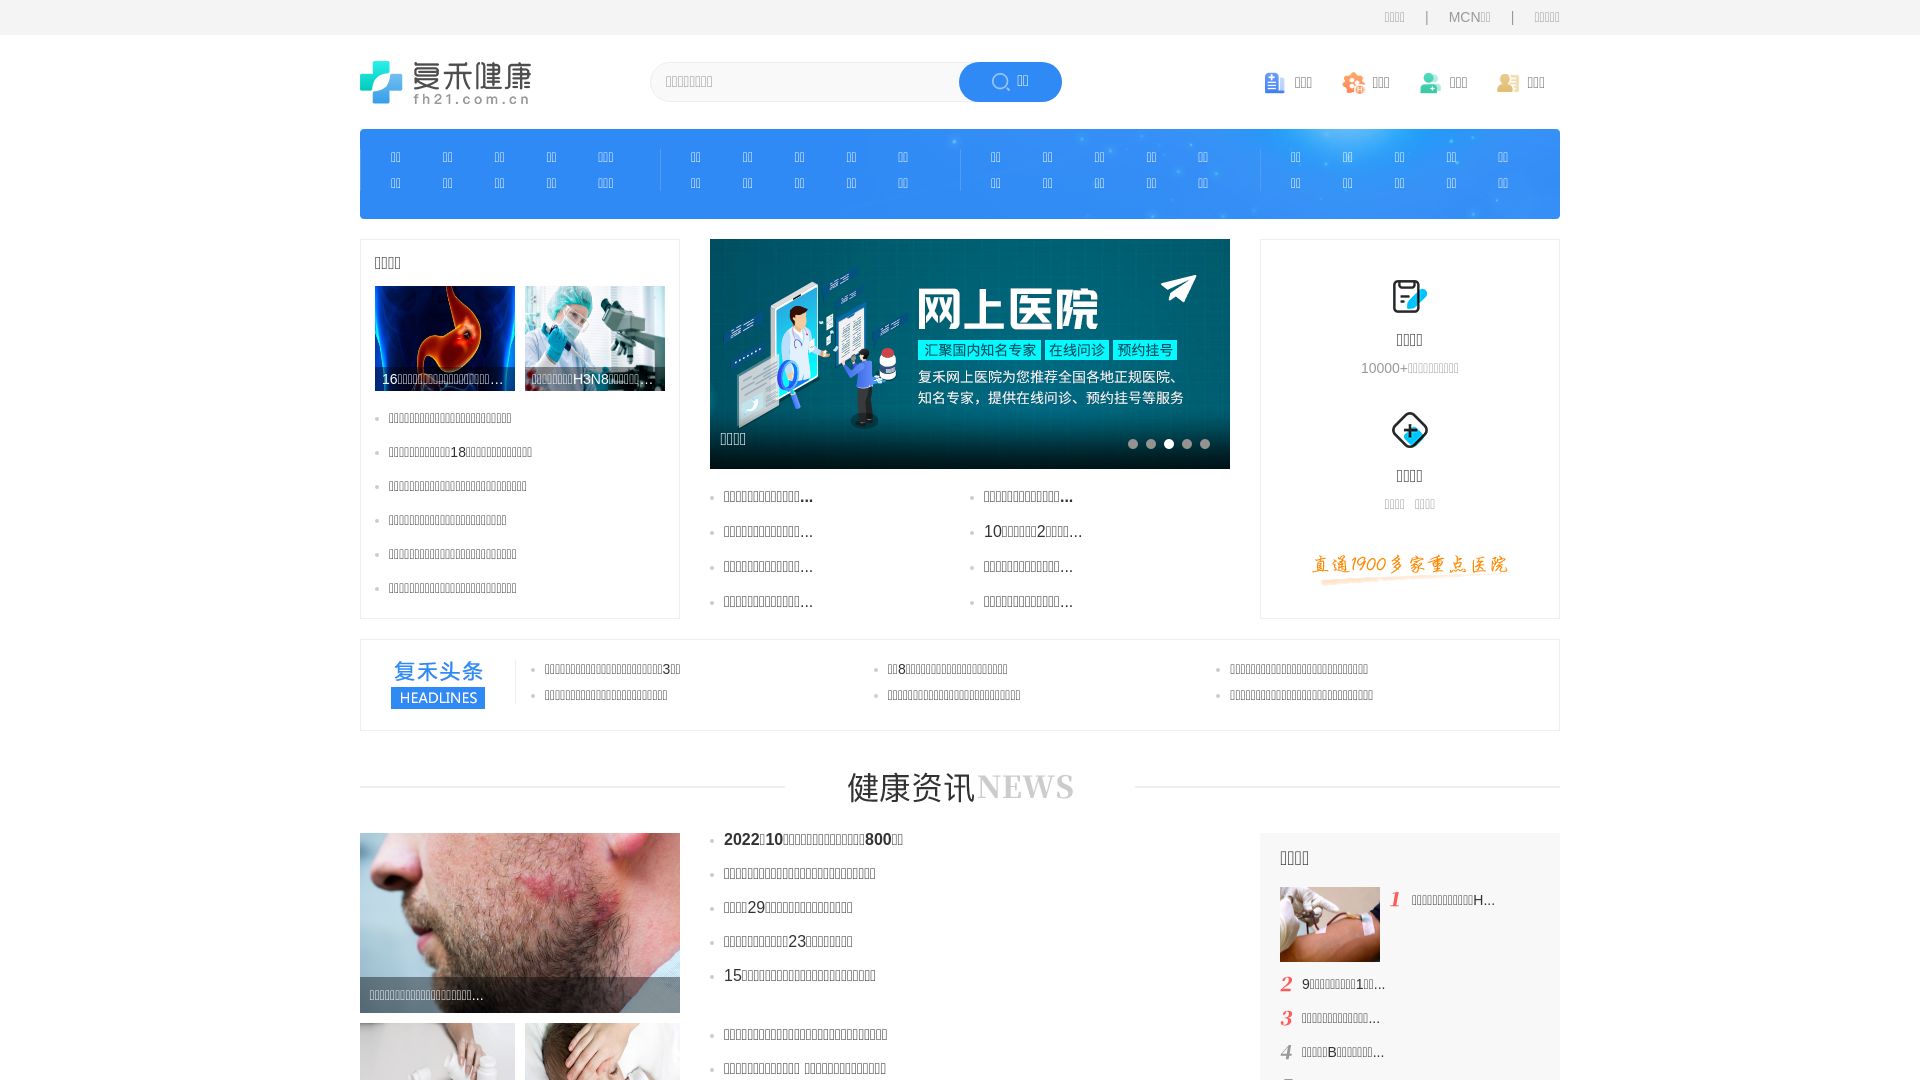 Website status fh21.com.cn is   ONLINE